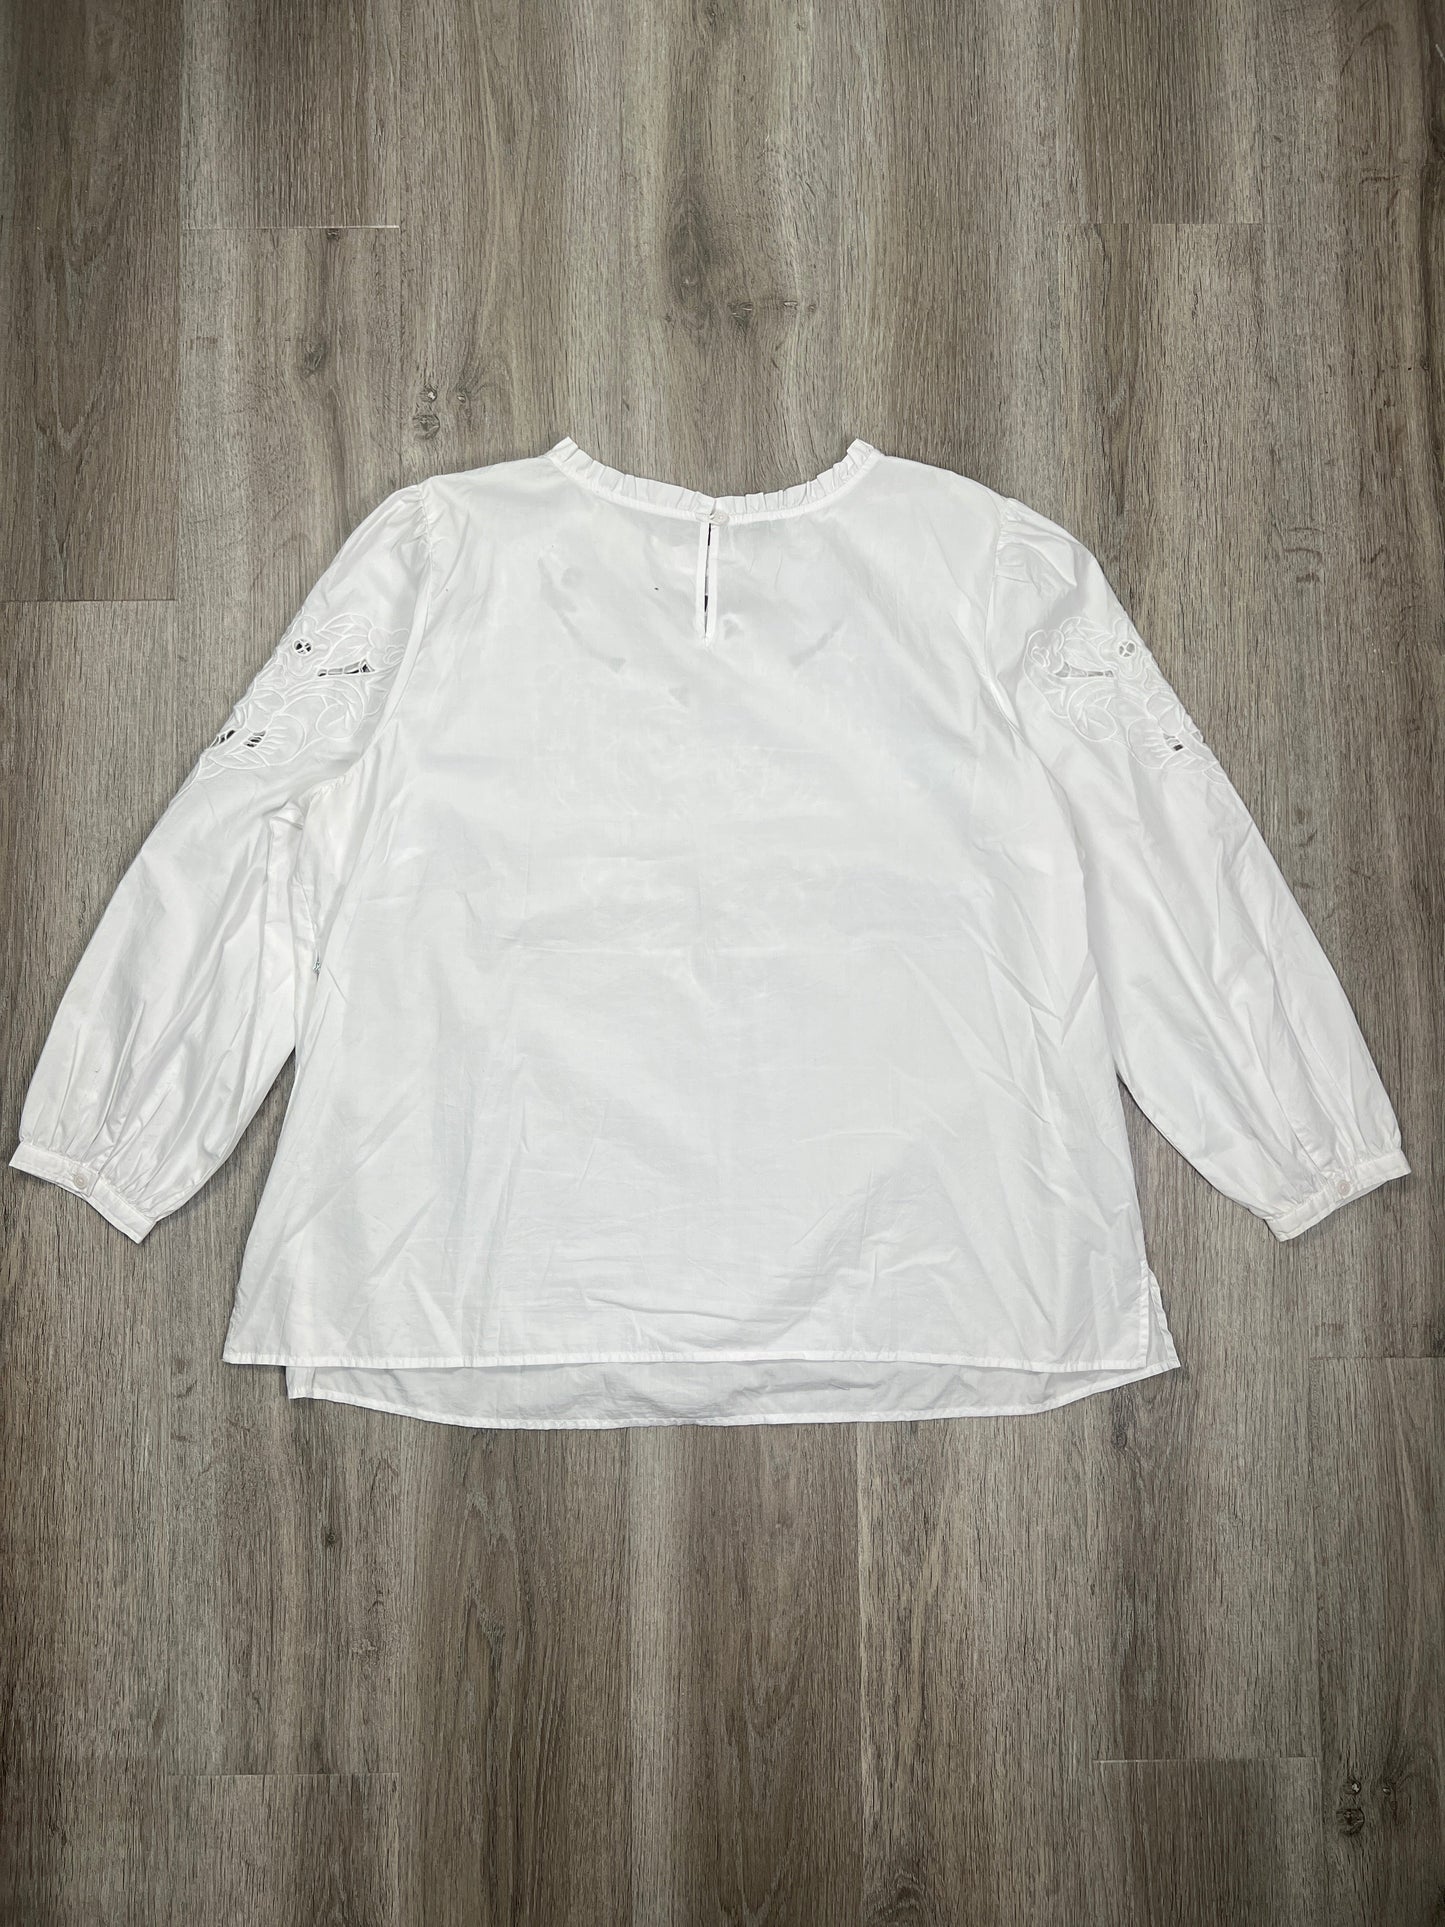 White Blouse Long Sleeve Talbots, Size 3x